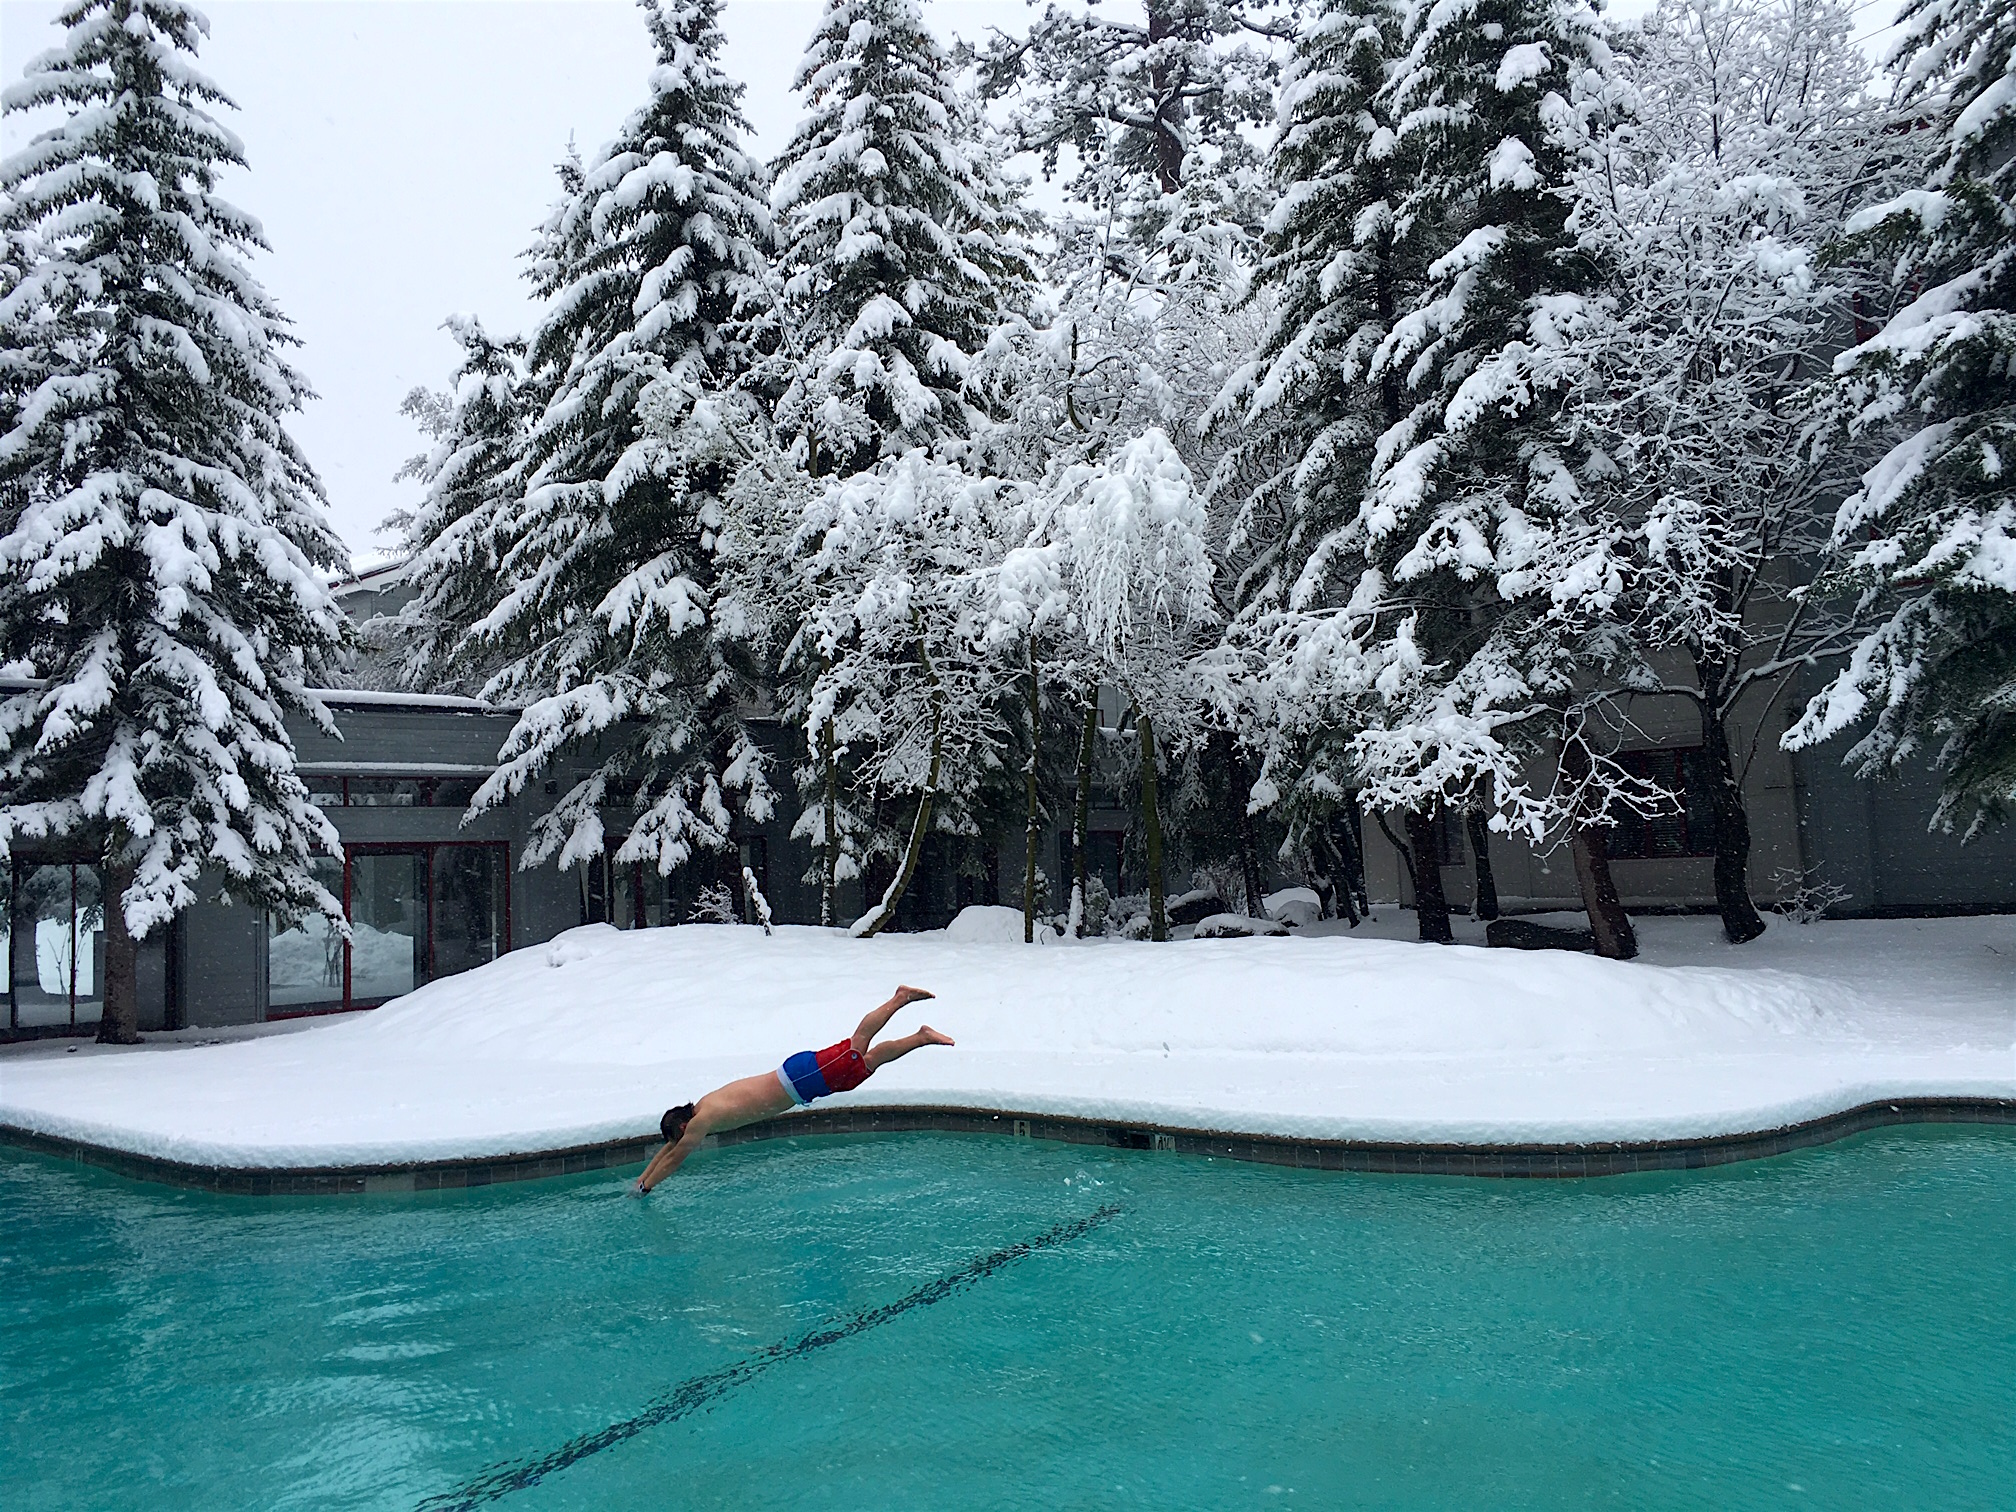 Yimmers pool huck. photo: snowbrains